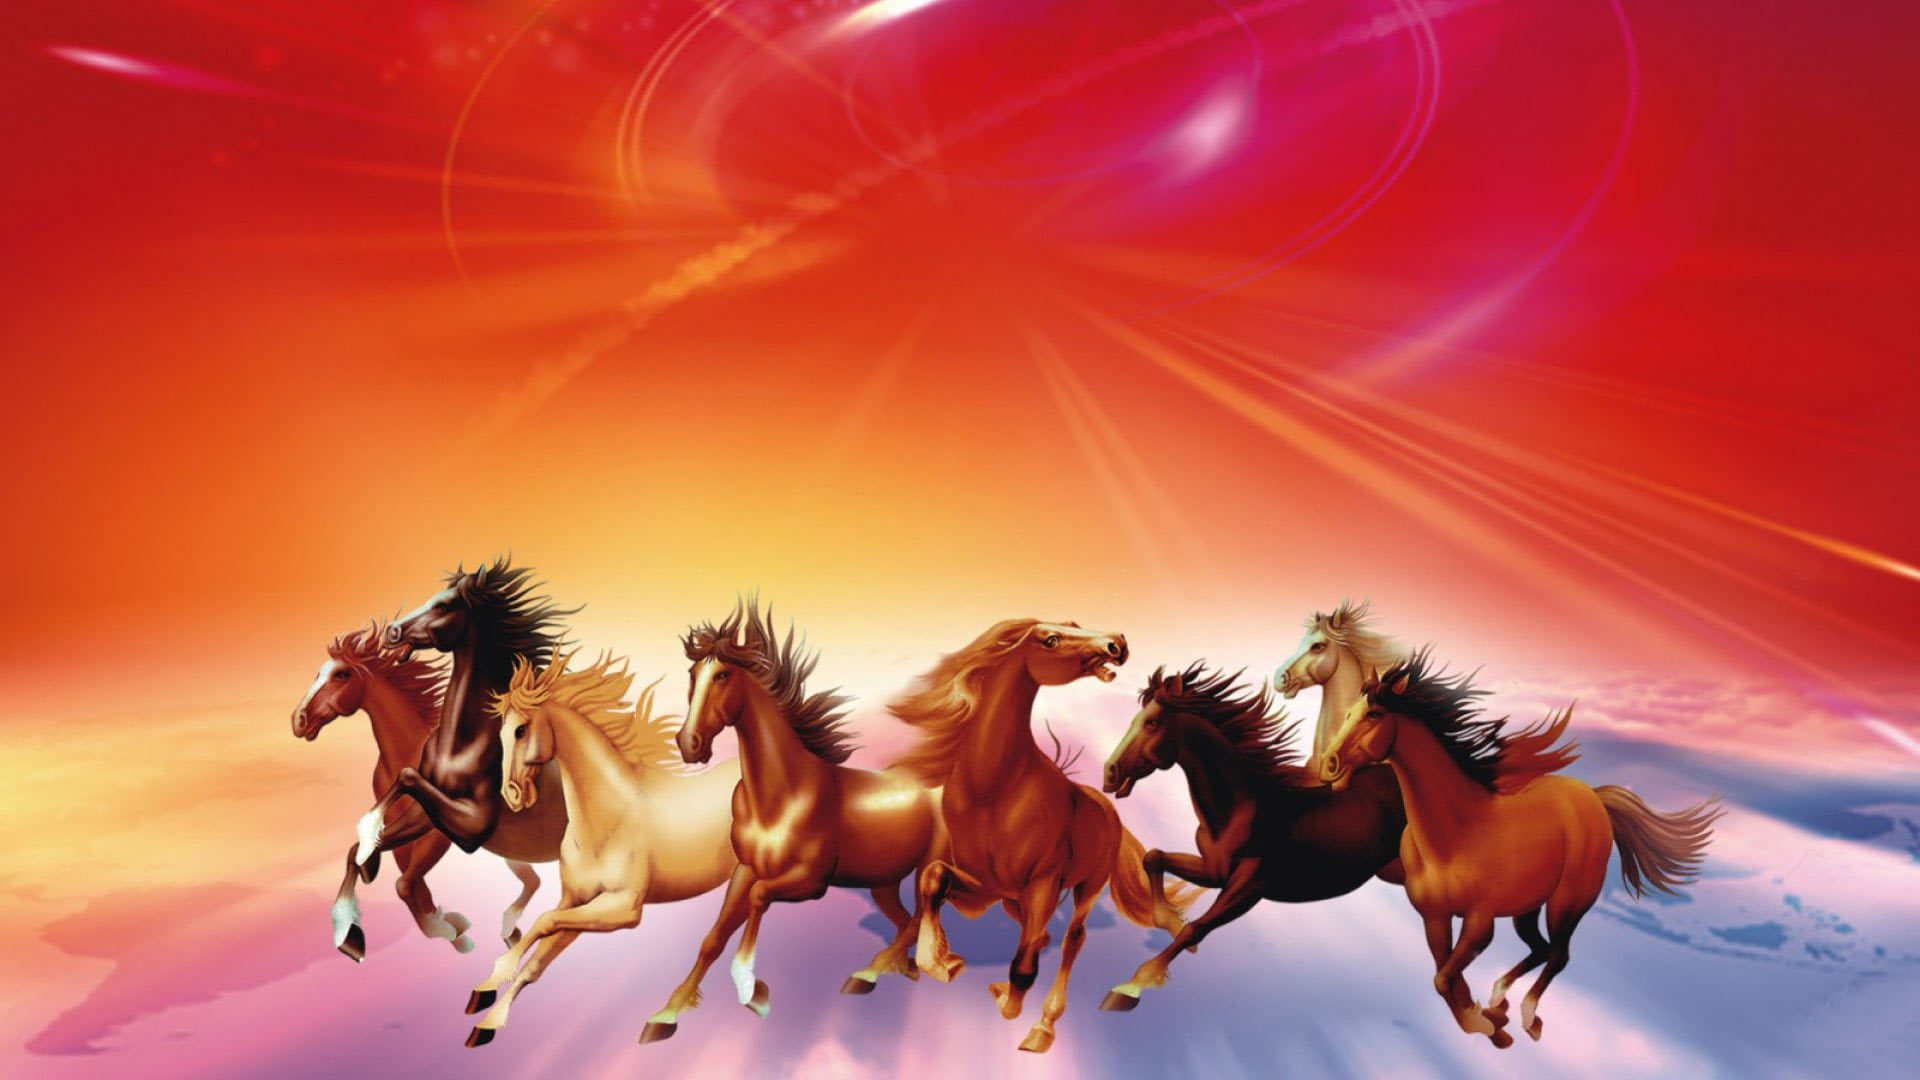 Seven Horses Running Wallpaper HD 1920x1080 for Desktop Free